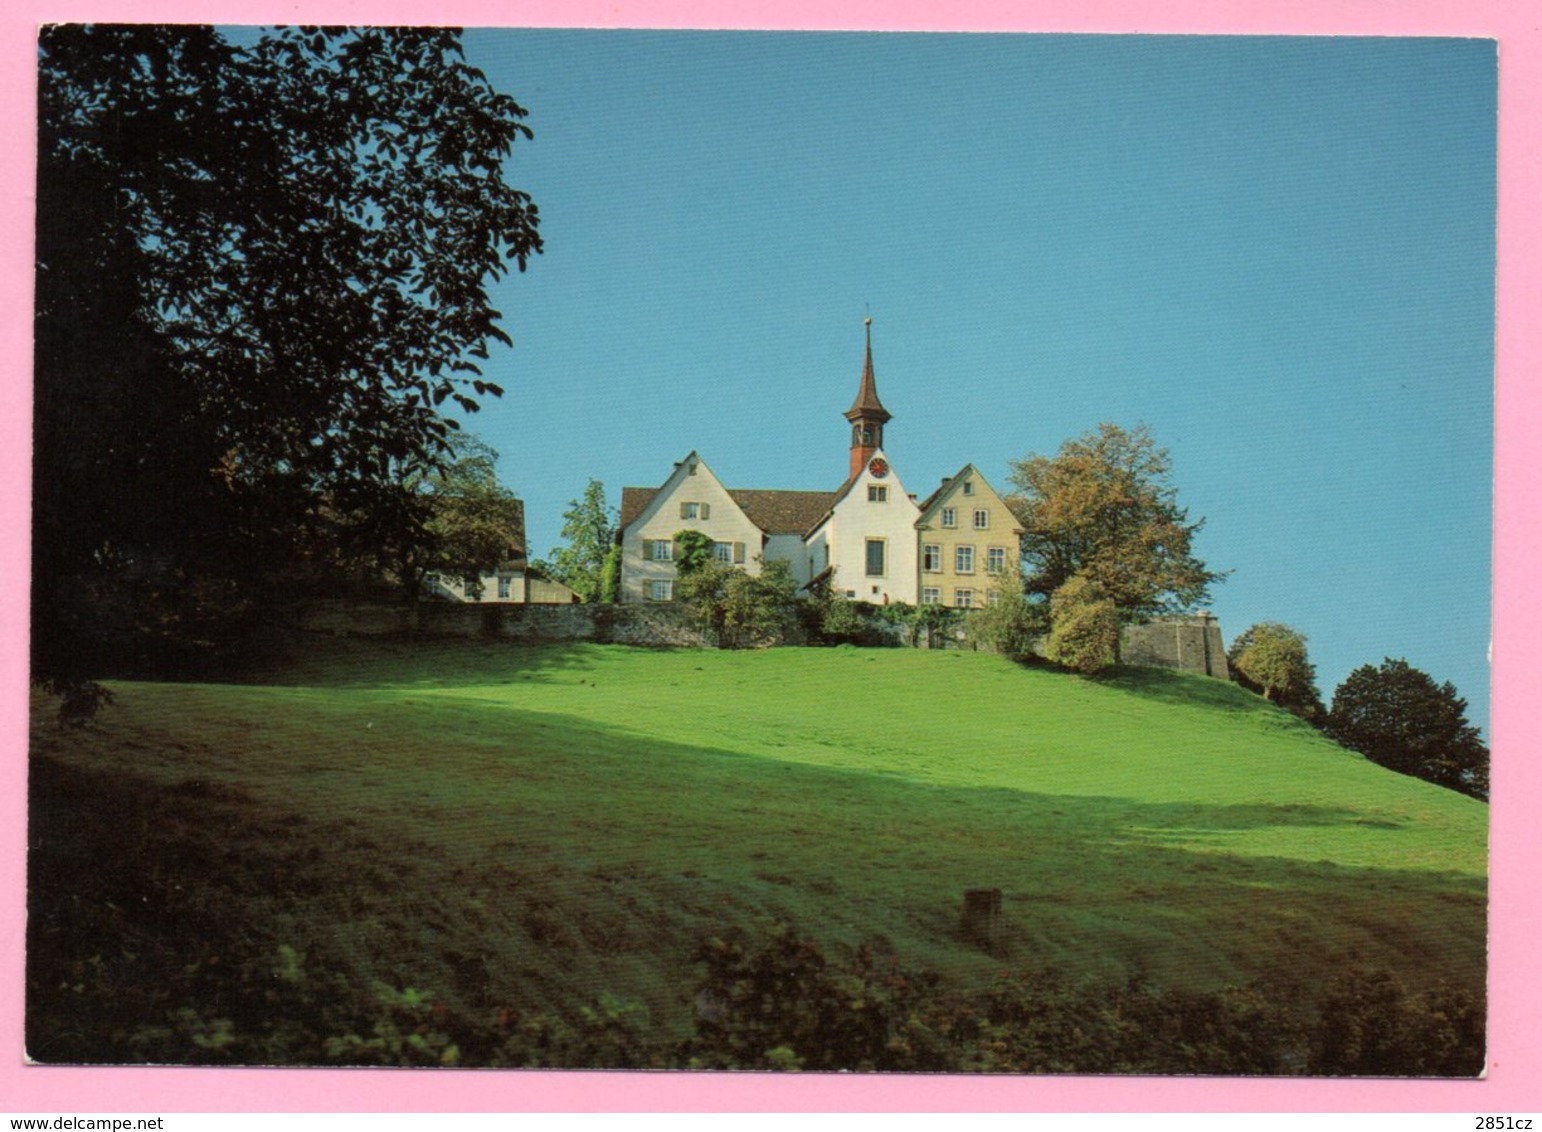 Postcard - Binningen Church Of Saint Margaret, Switzerland / Helvetia - Binningen